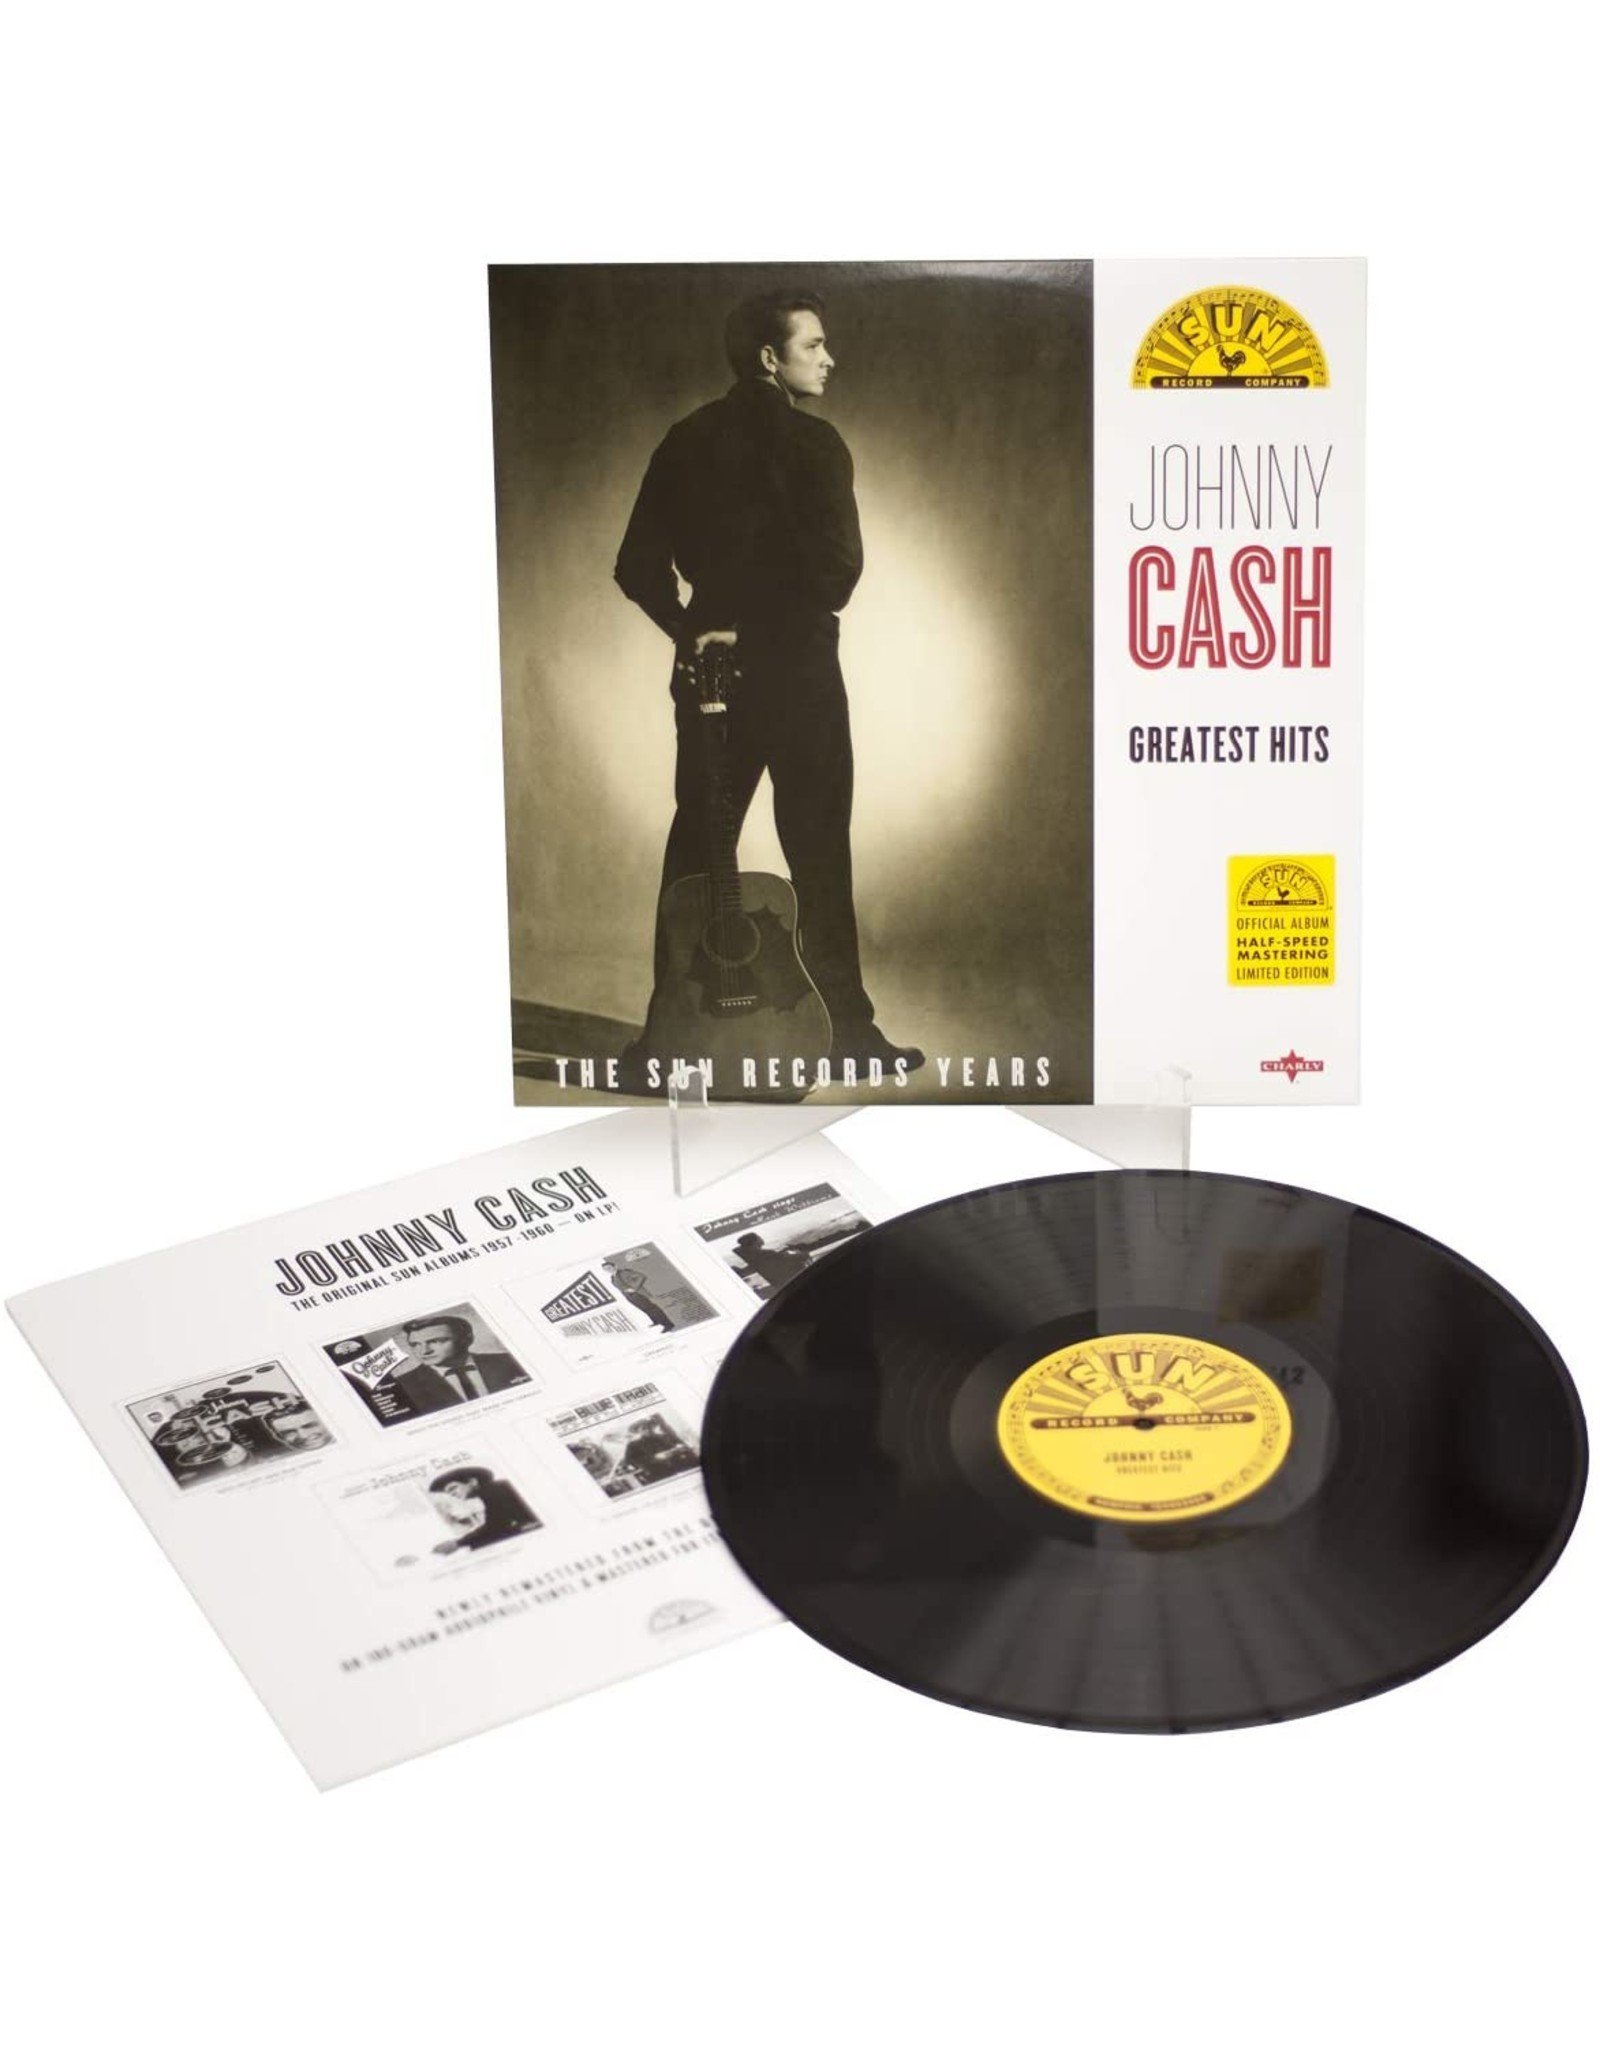 Johnny Cash - Greatest Hits (Sun Records) [Half Speed Master]